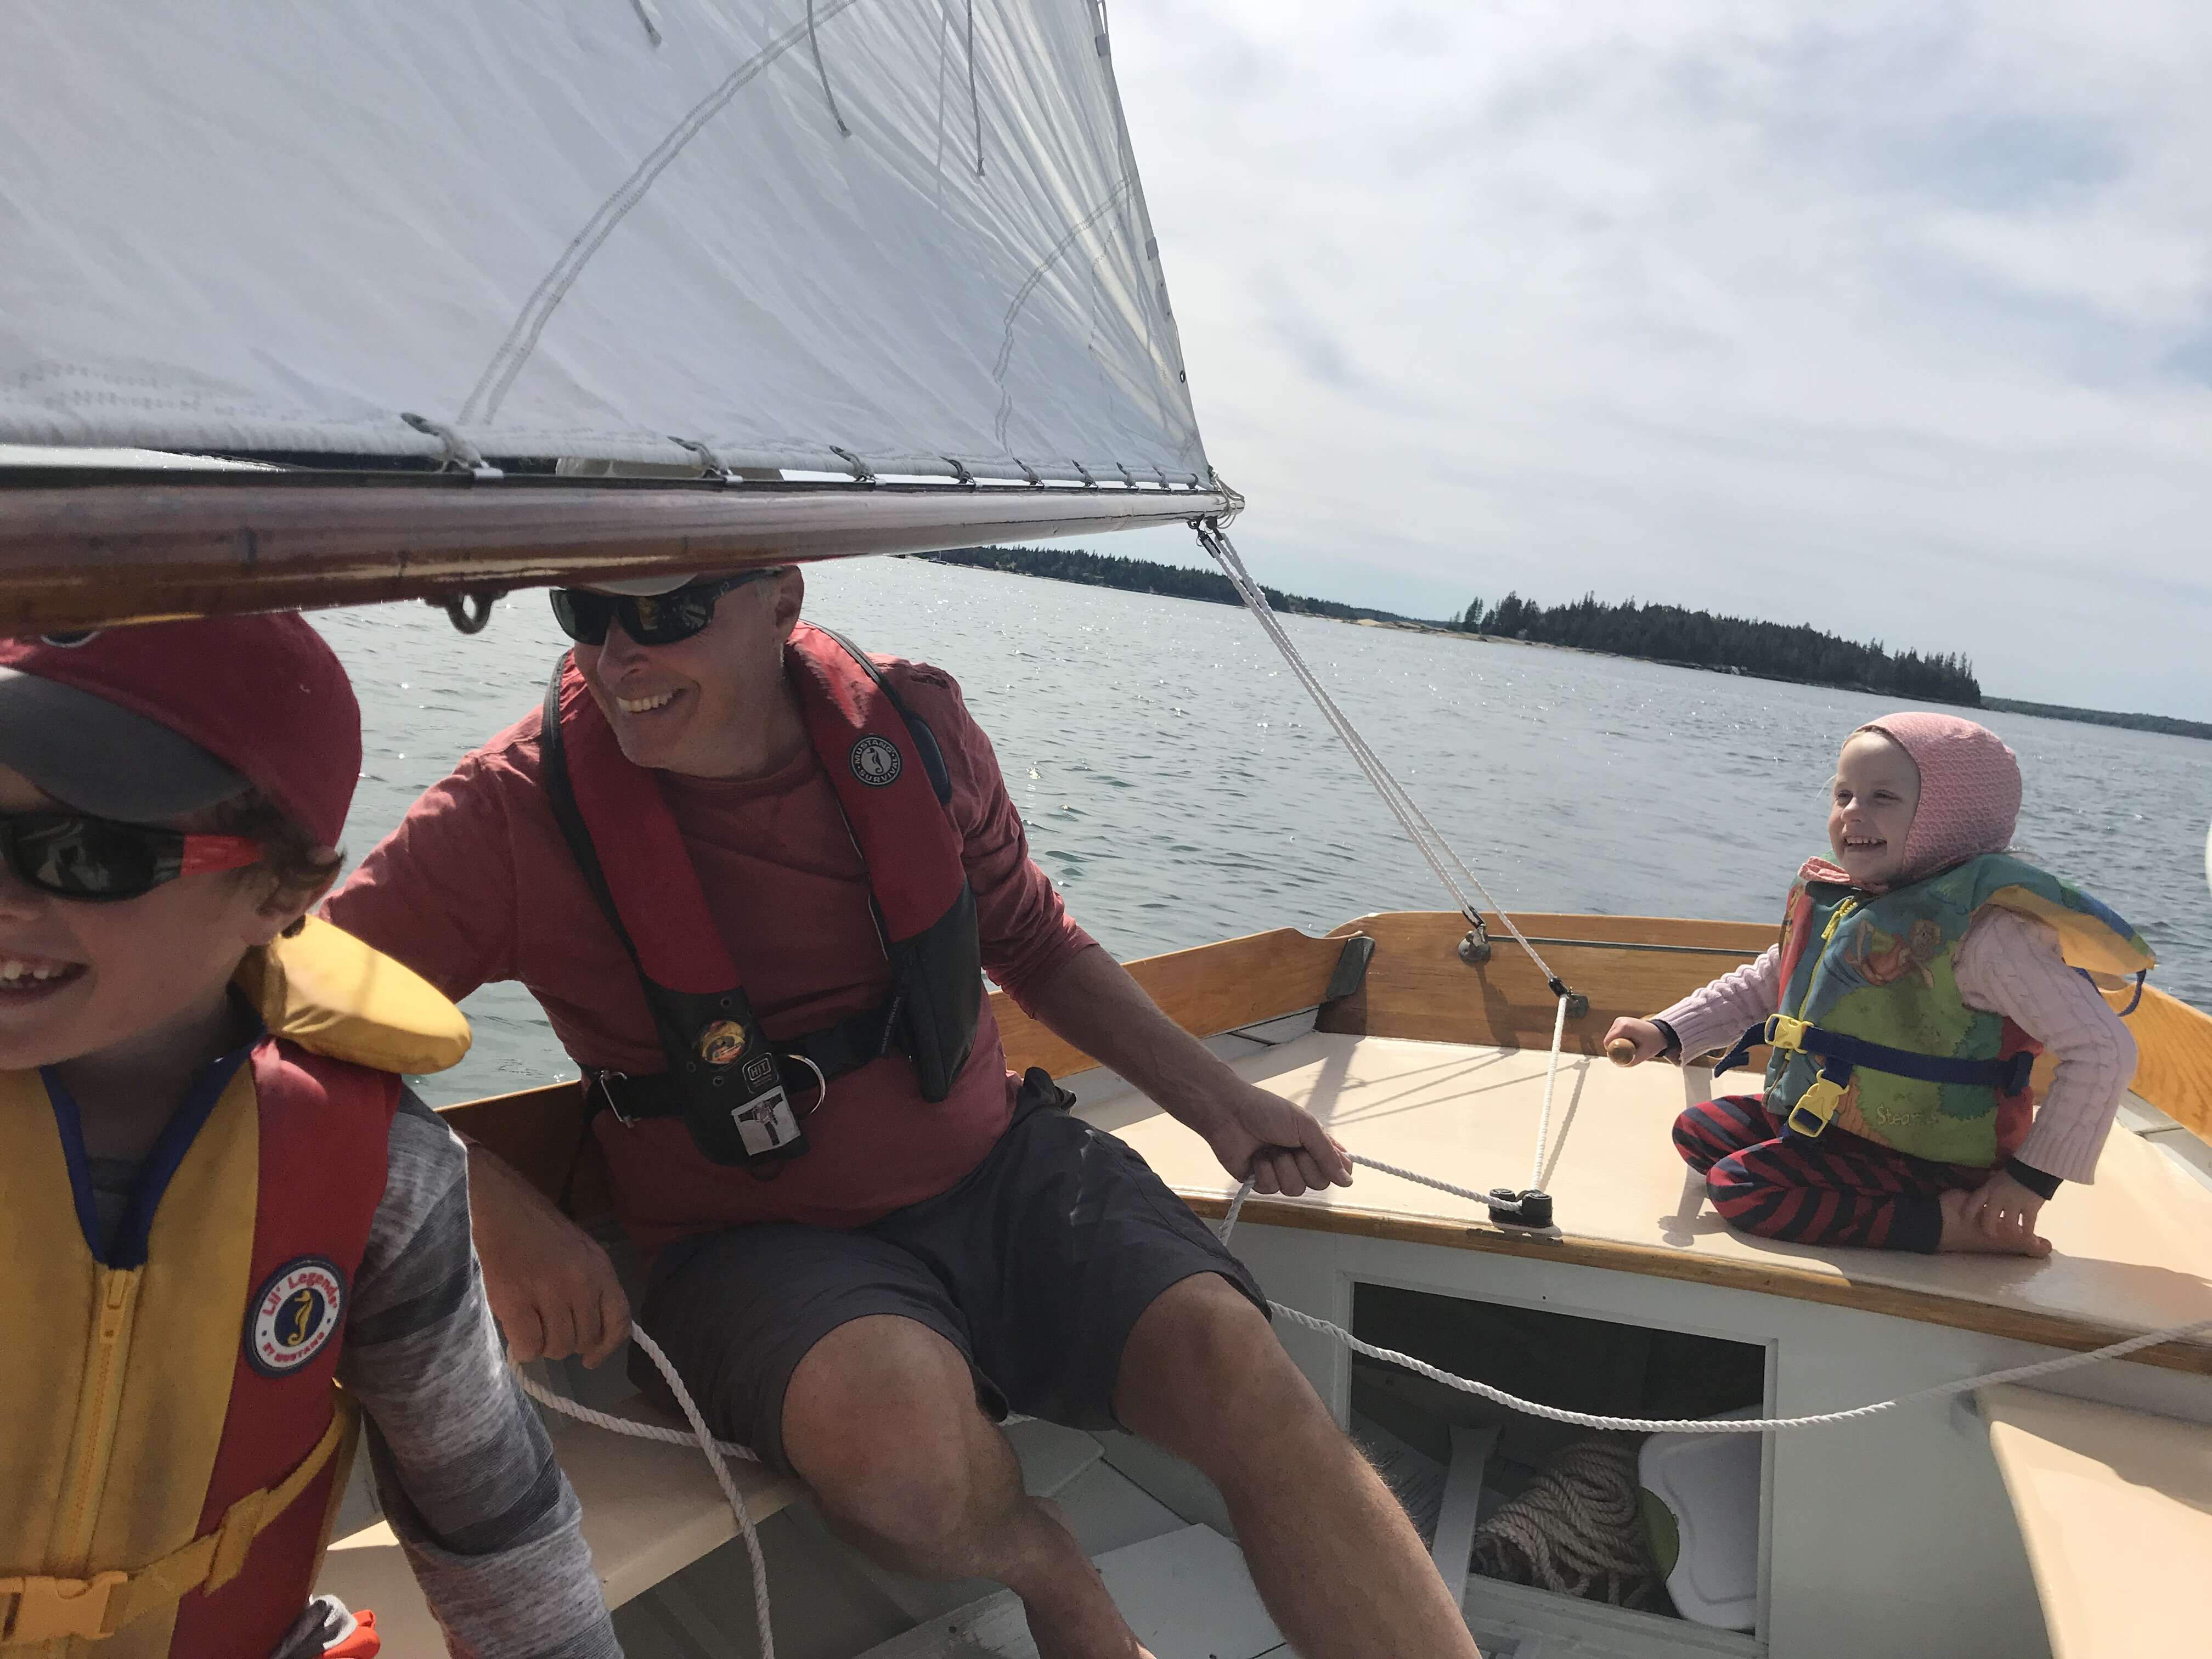 3 people sailing